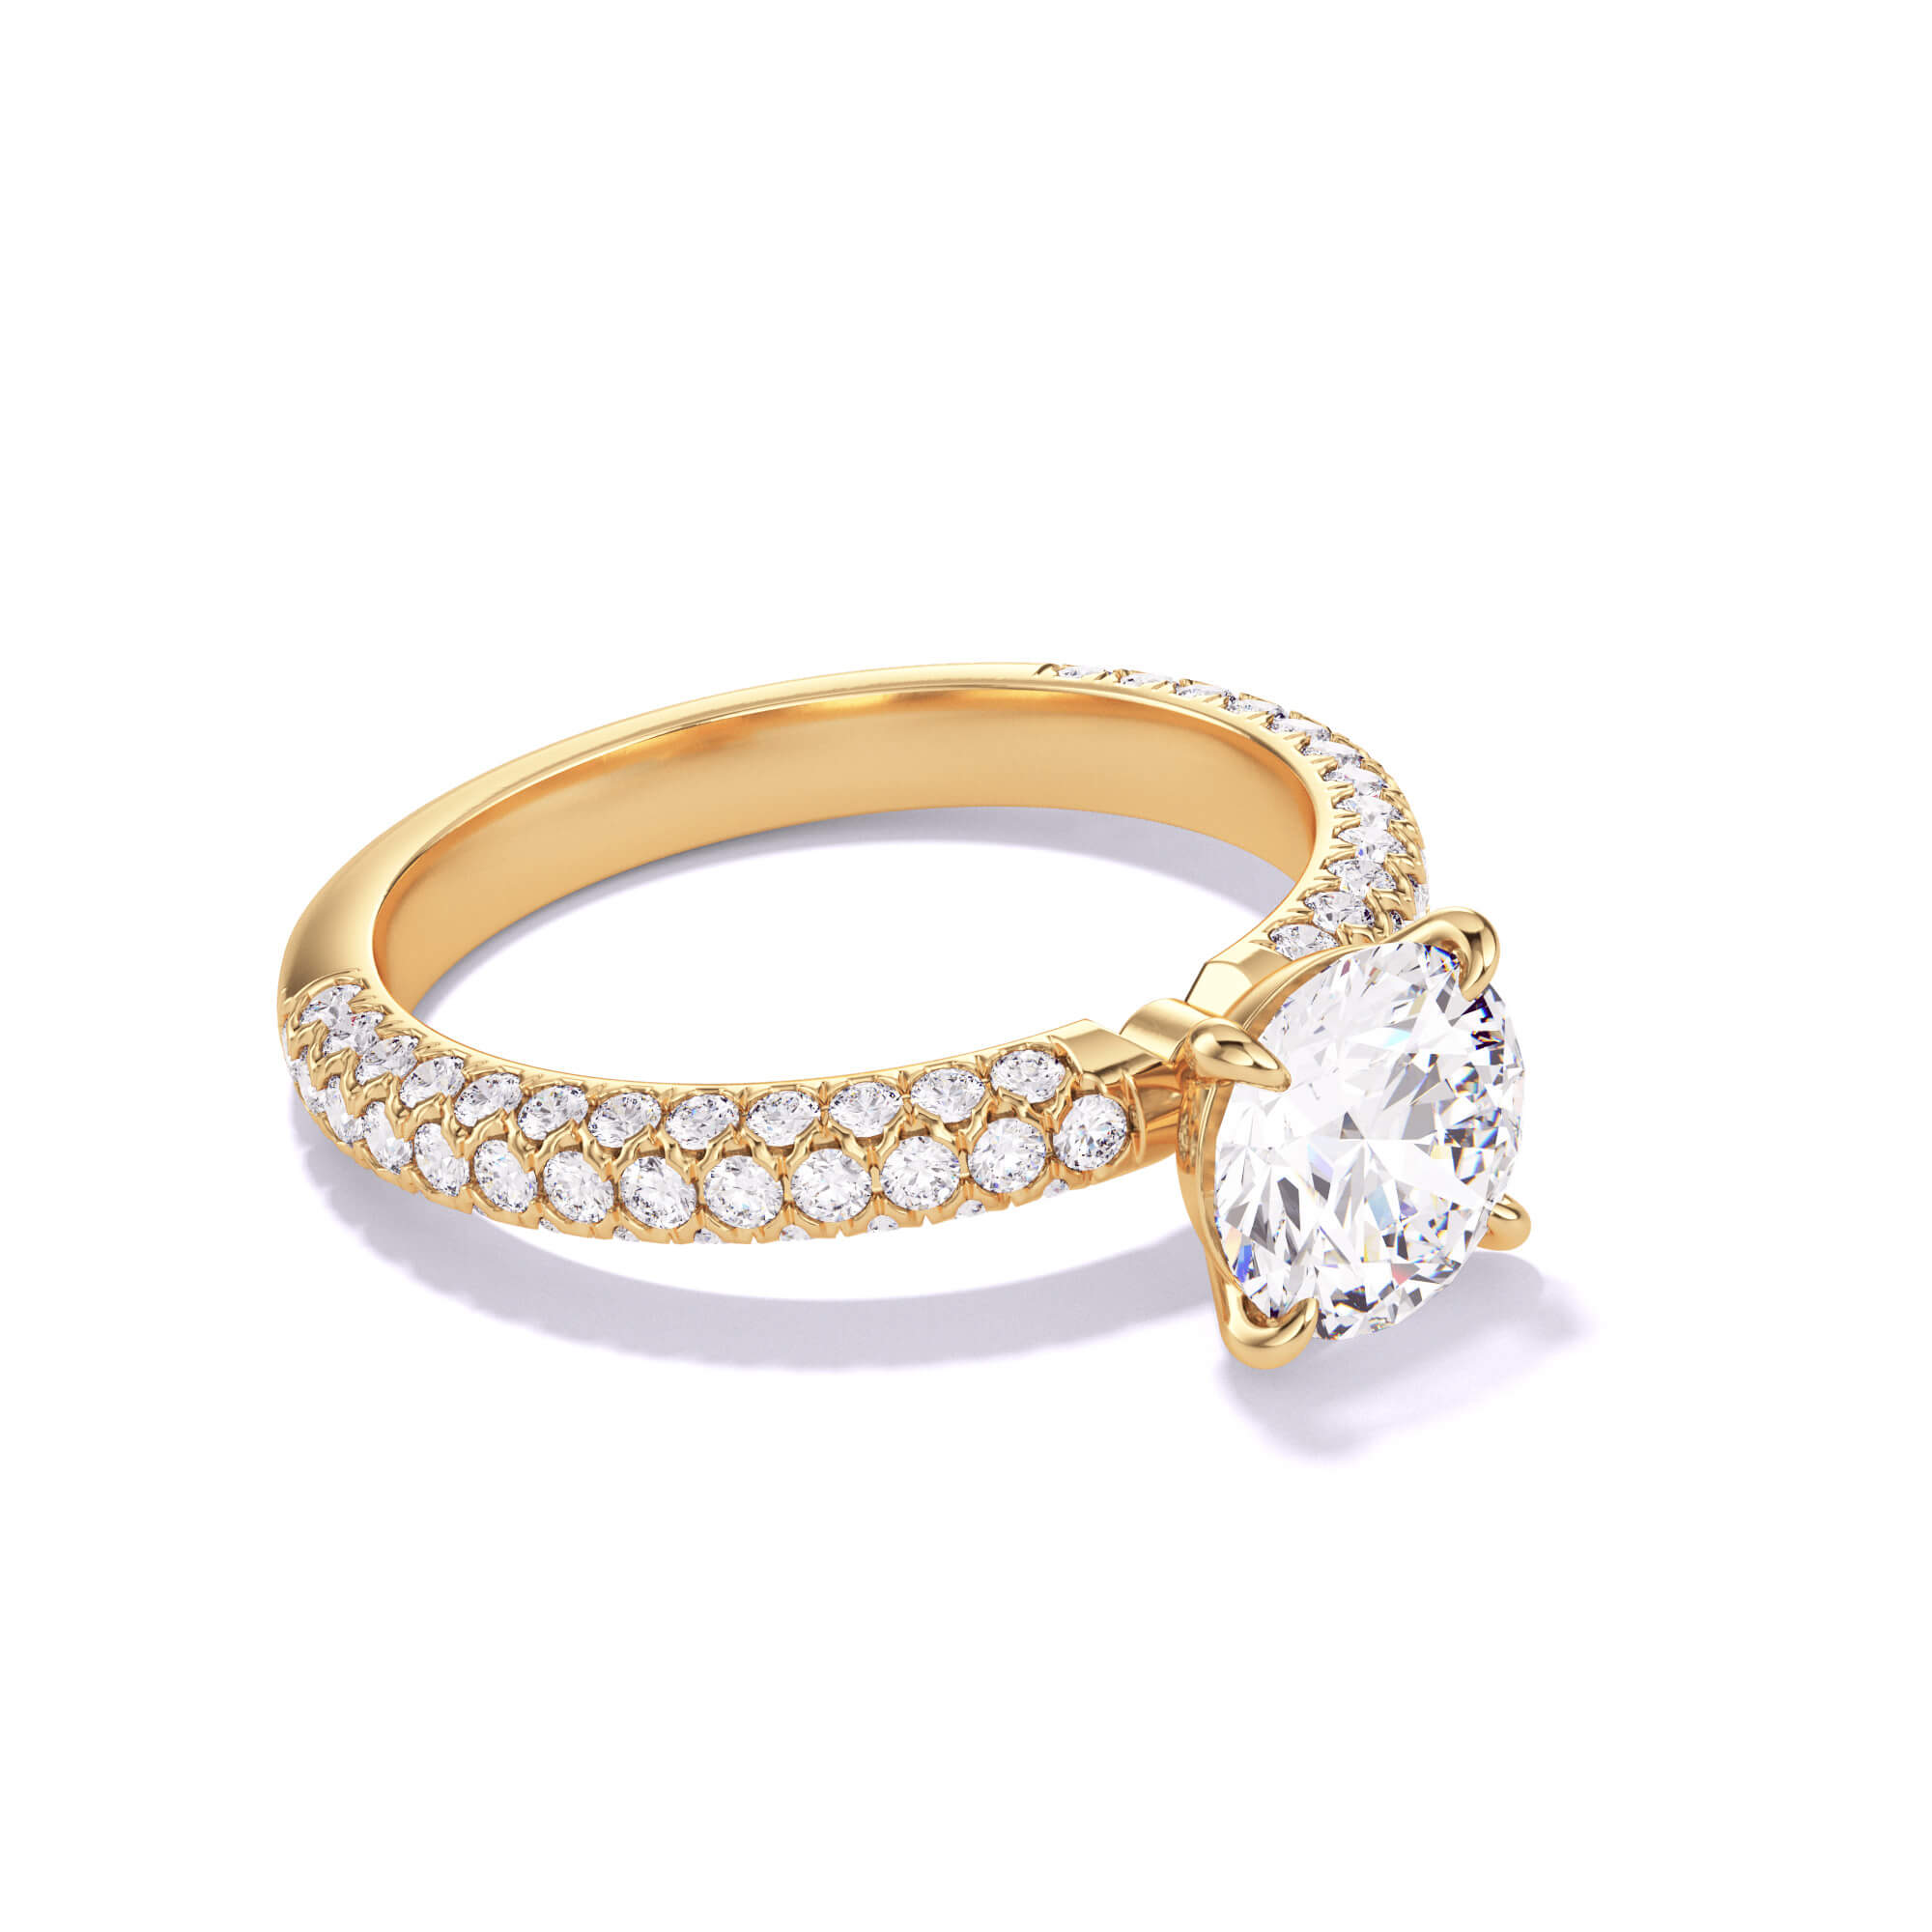 1 carat round diamond engagement ring